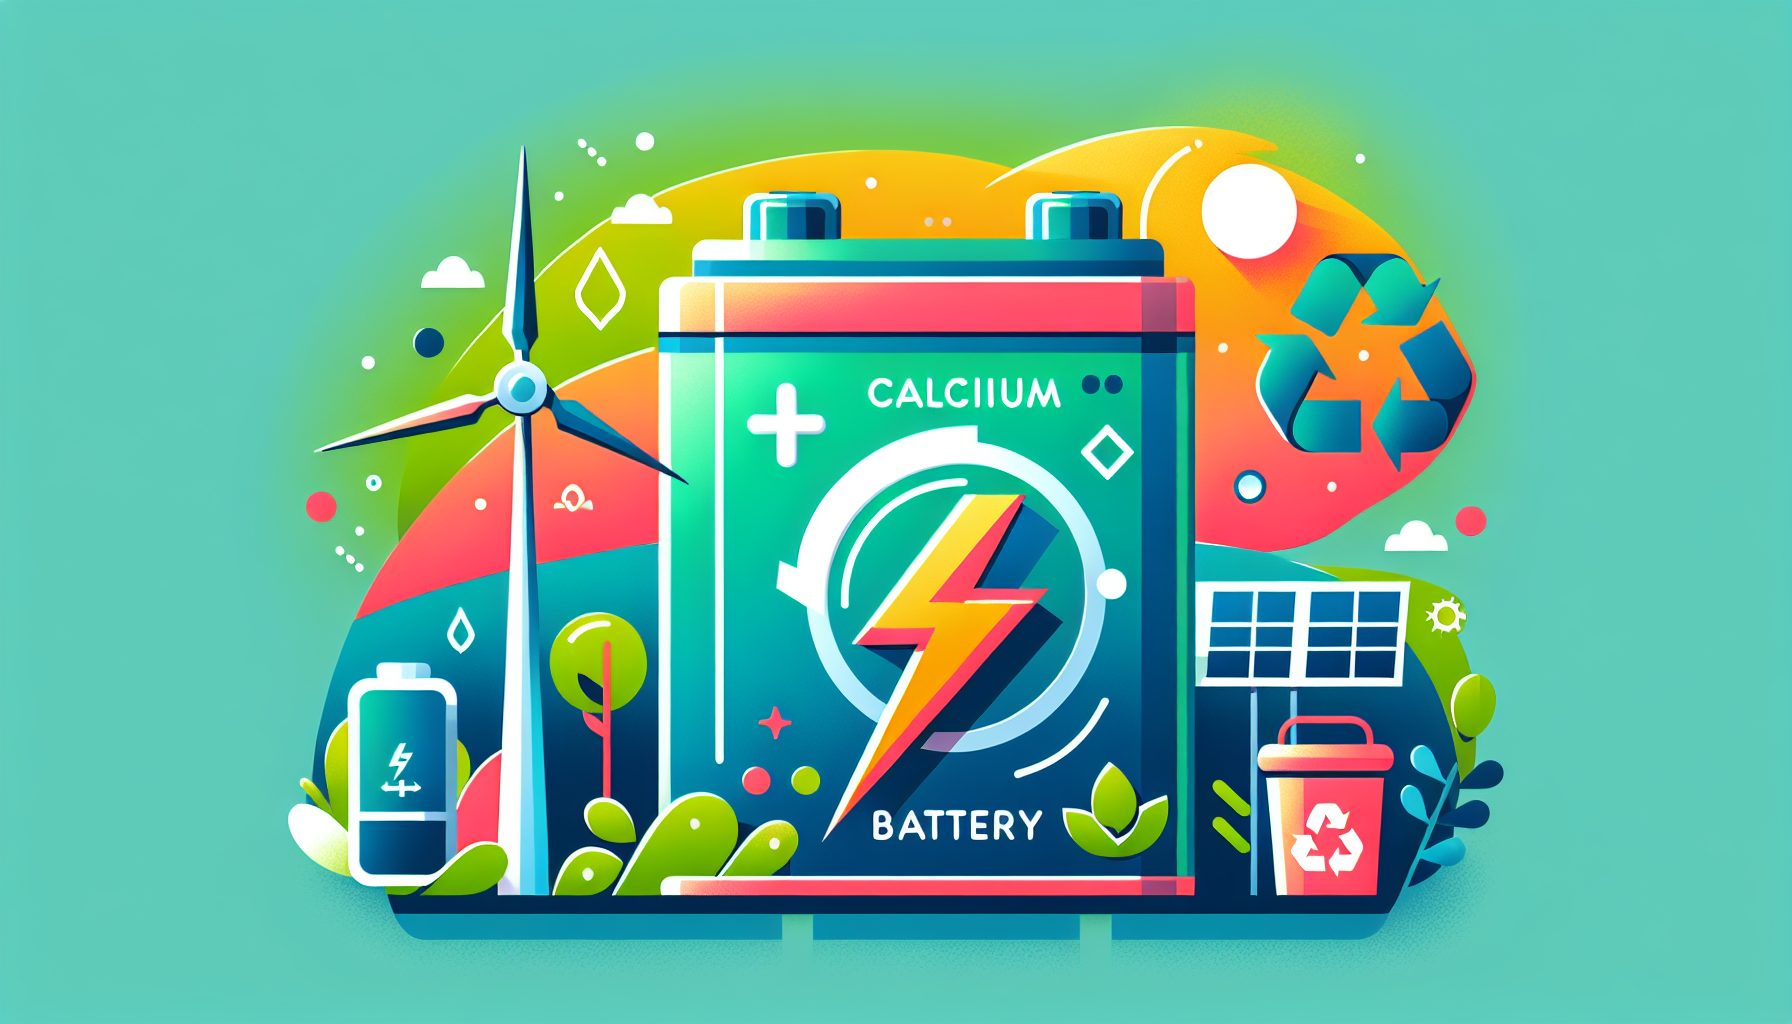 "Calcium-Based Battery"